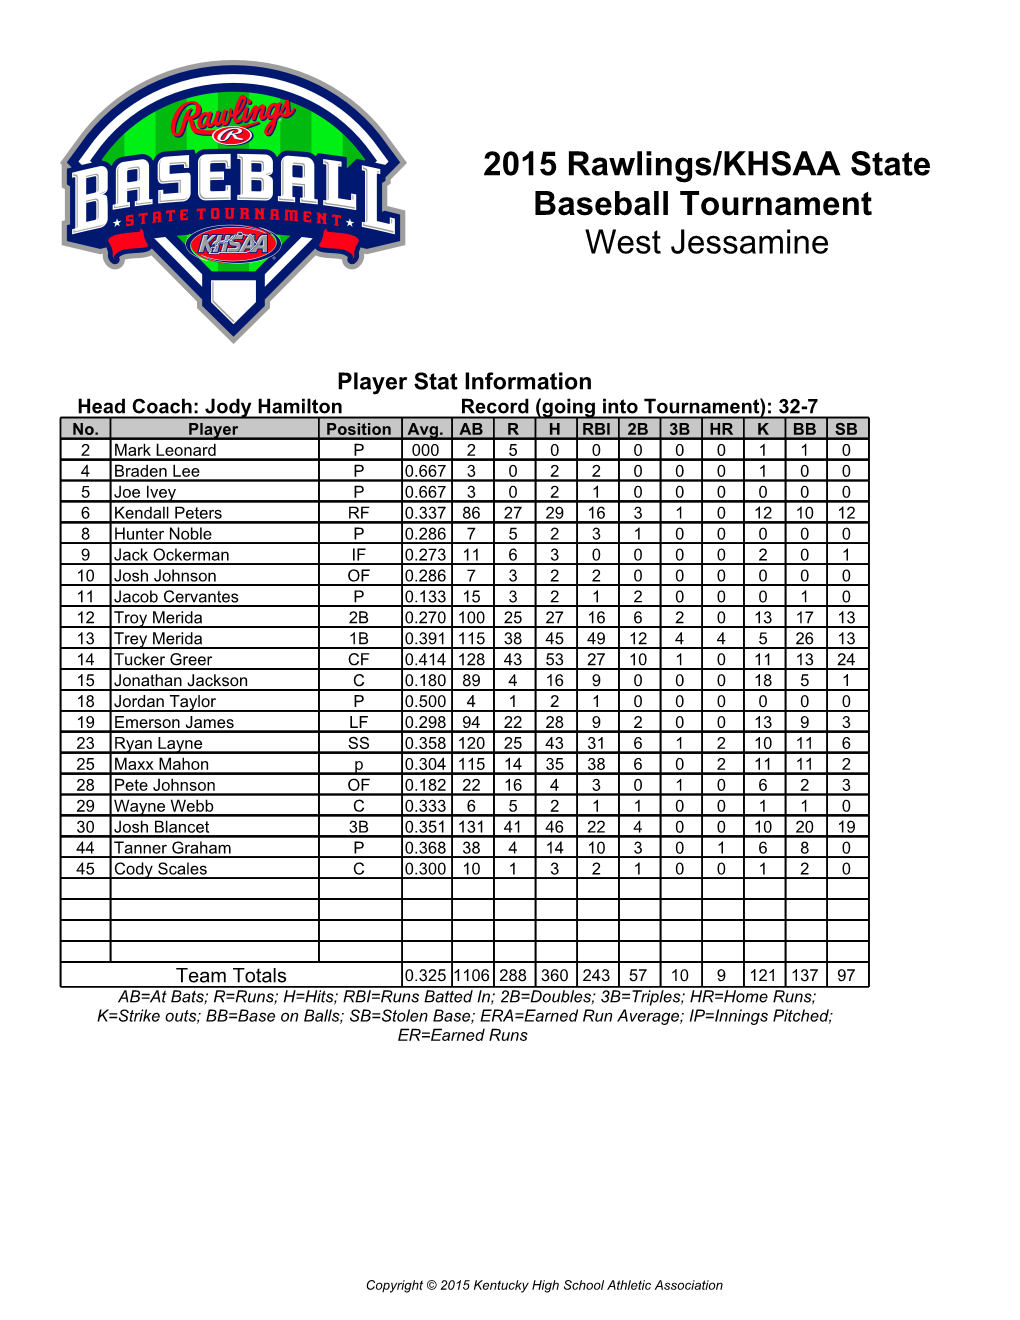 2015 Rawlings/KHSAA State Baseball Tournament West Jessamine